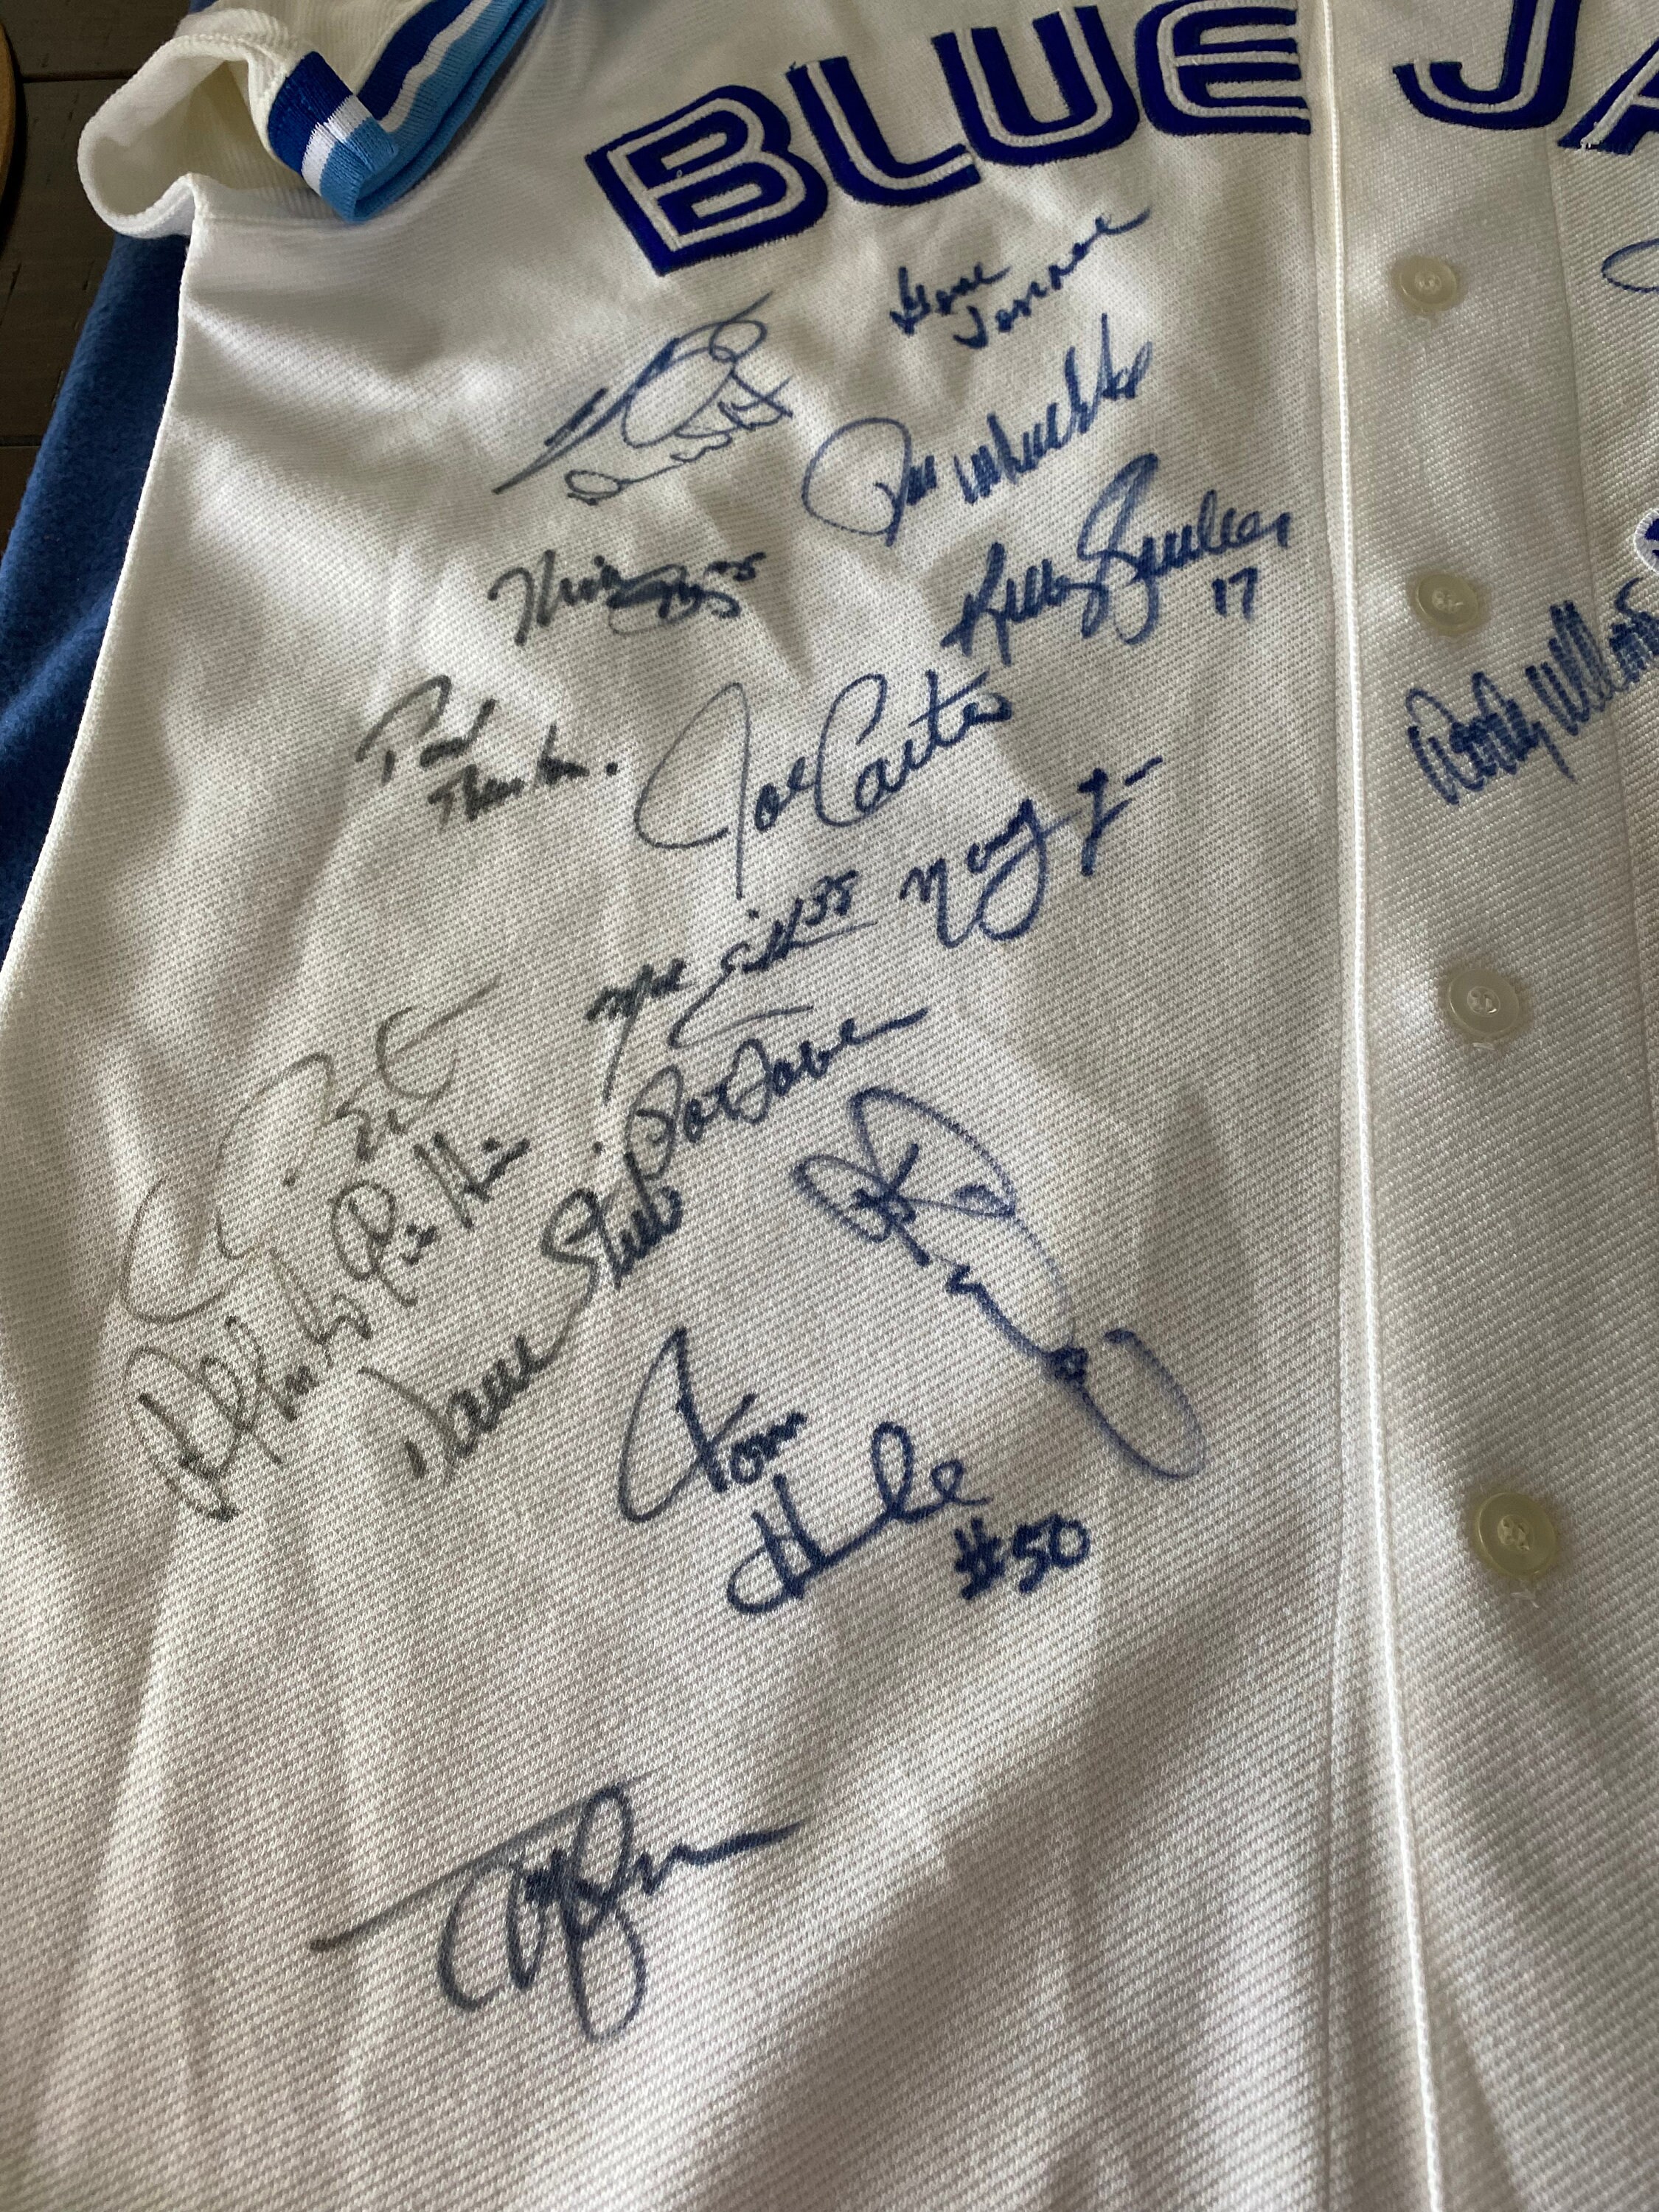 Tom Henke Signed Toronto Blue Jays Blue Replica Majestic Jersey